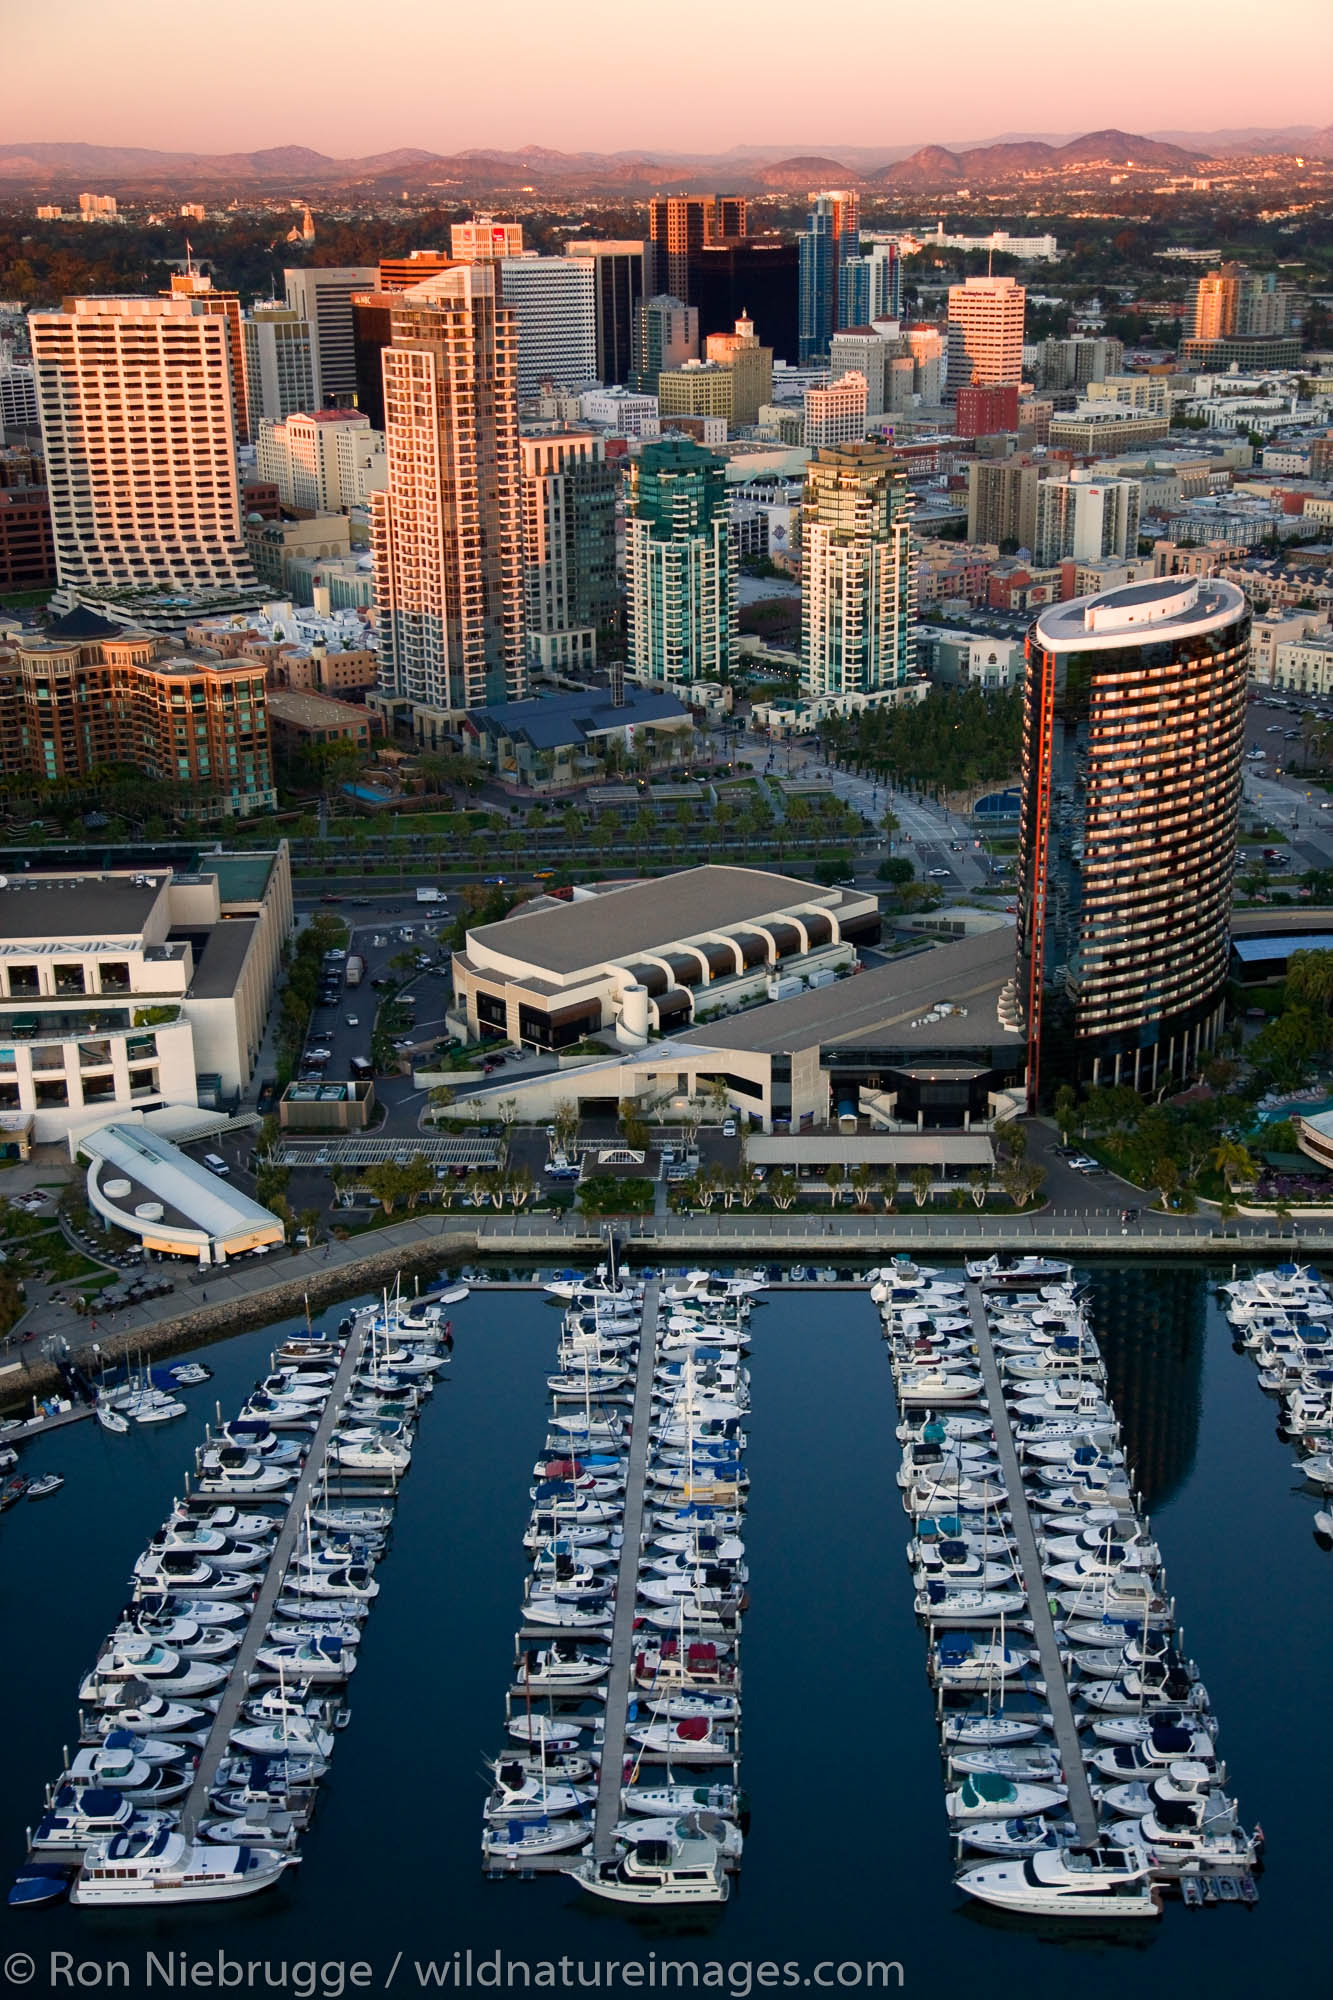 Marriott Hotel, Seaport Village and the Embarcadero Marina Park, downtown San Diego, California.